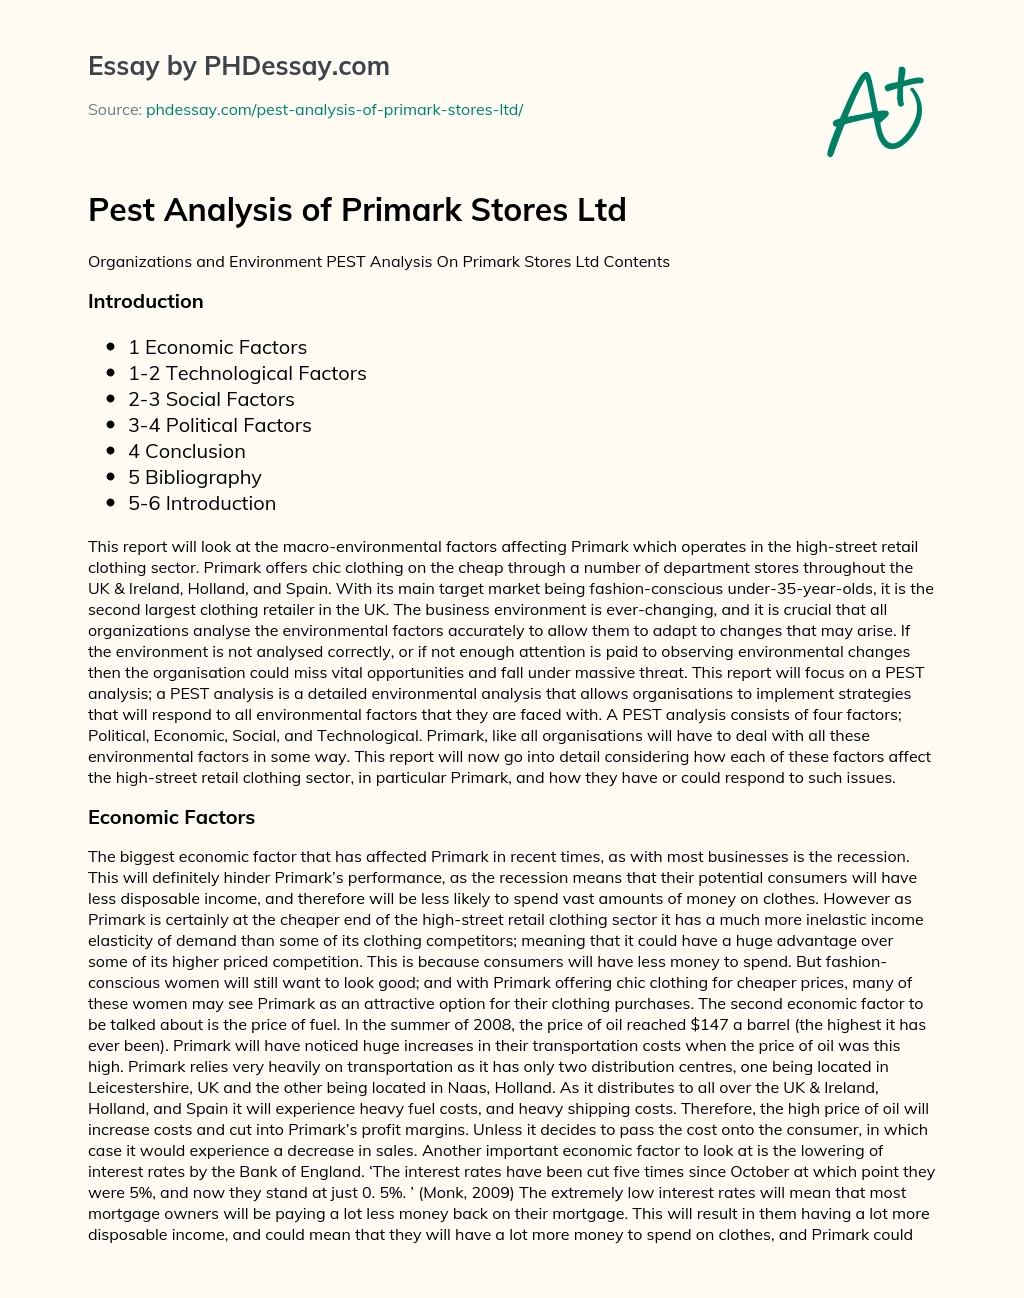 PEST Analysis of Primark Stores Ltd essay